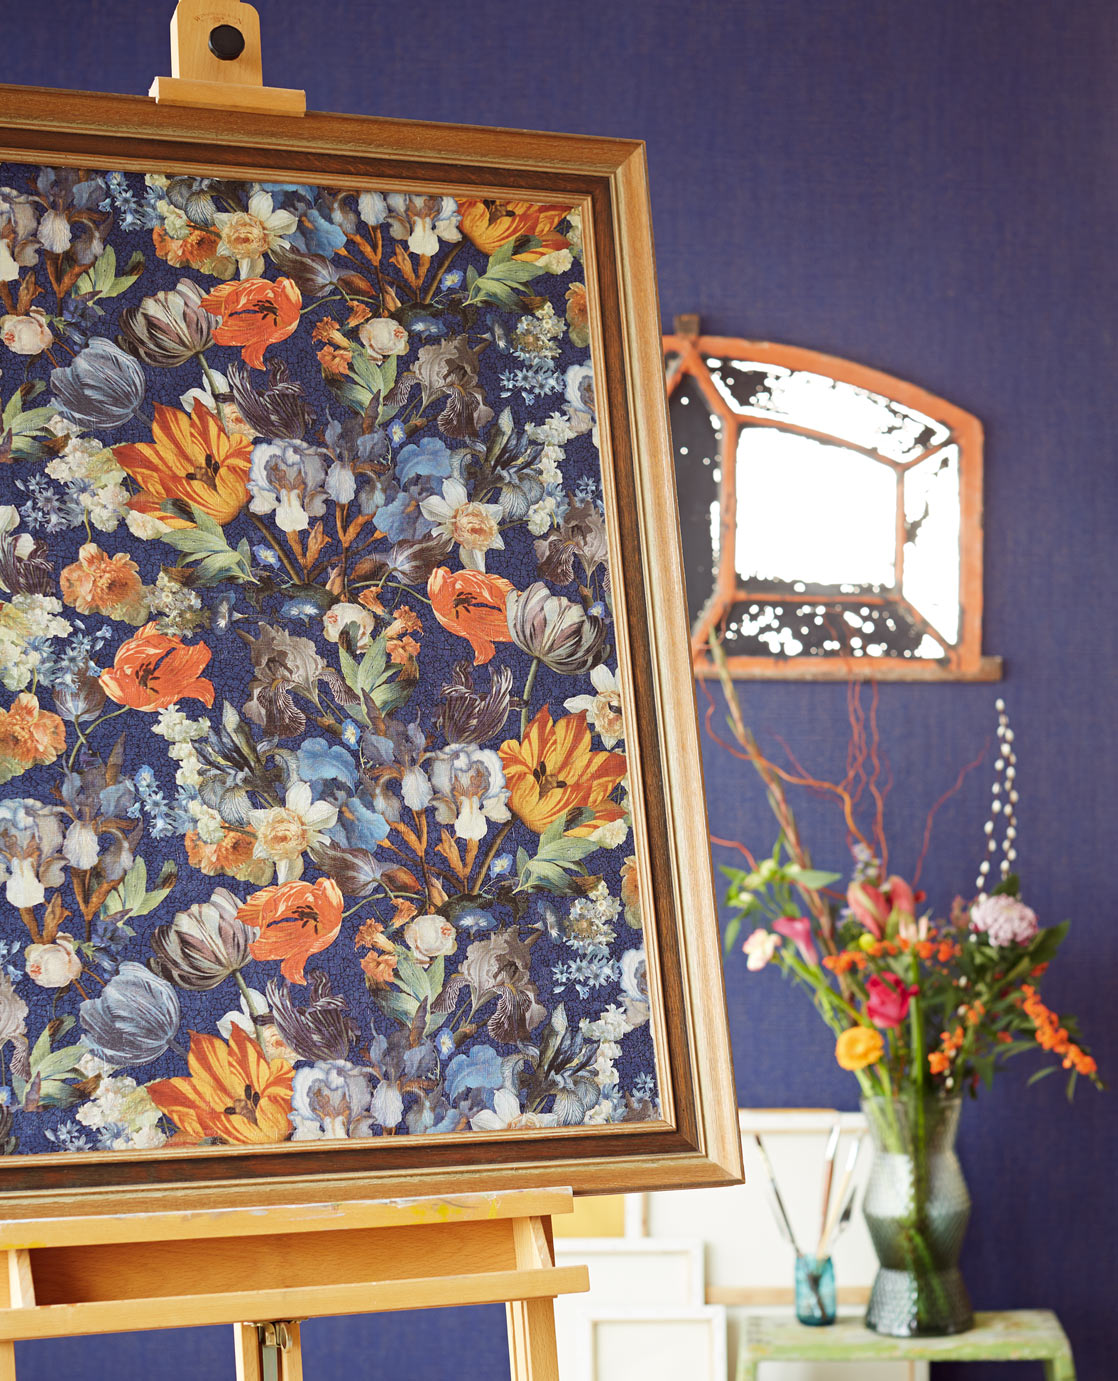 Masterpiece Antique Floral wallpaper